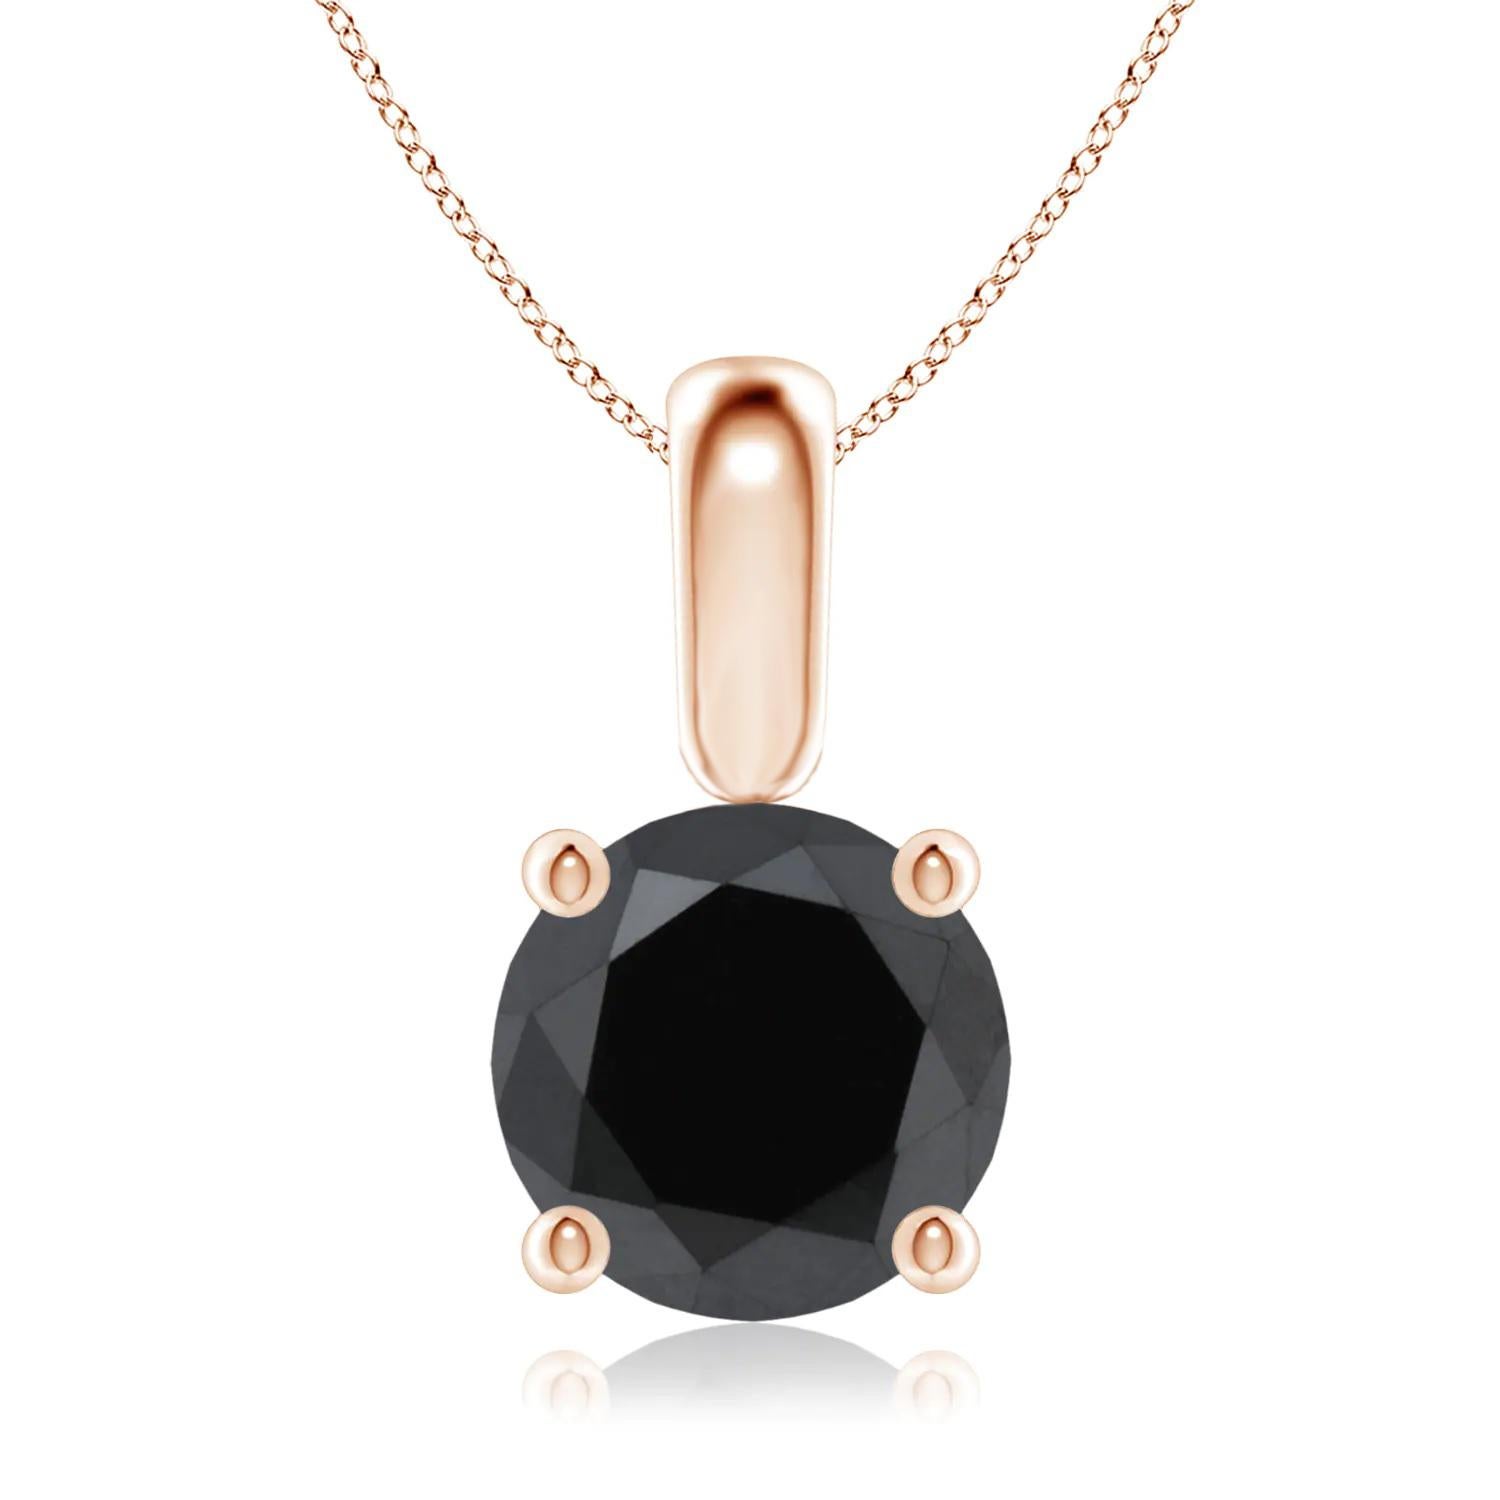 Contemporary 3.15 Carat Round Black Diamond Solitaire Pendant Necklace in 14K Rose Gold